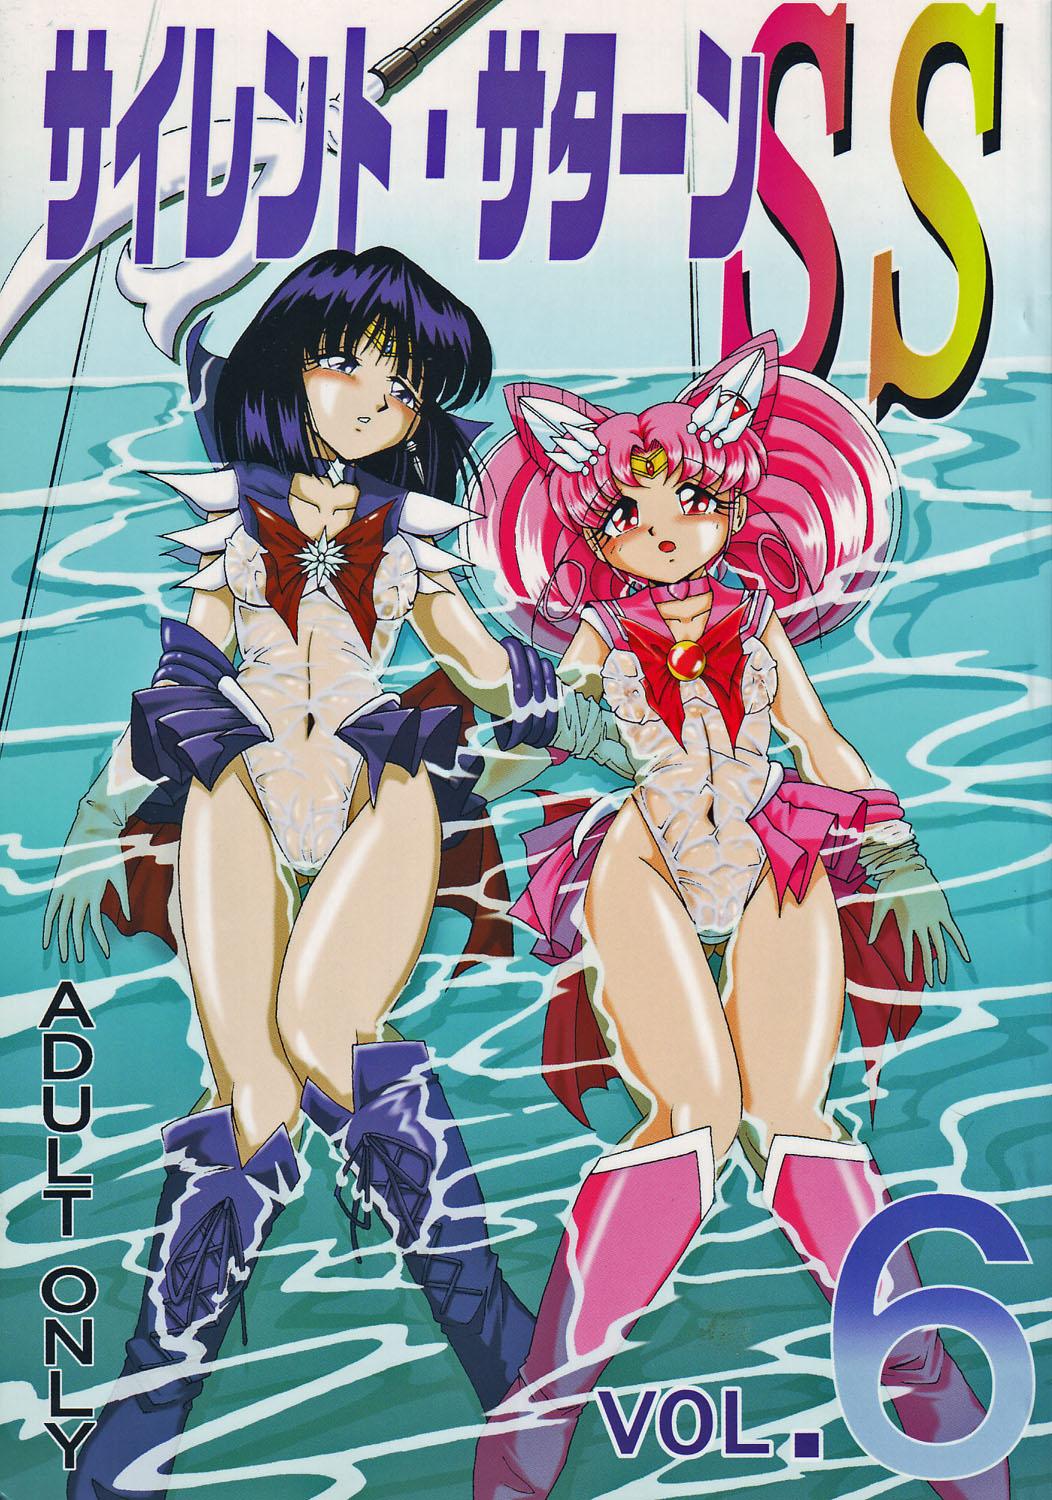 Coeds Silent Saturn SS vol. 6 - Sailor moon Porn - Page 1